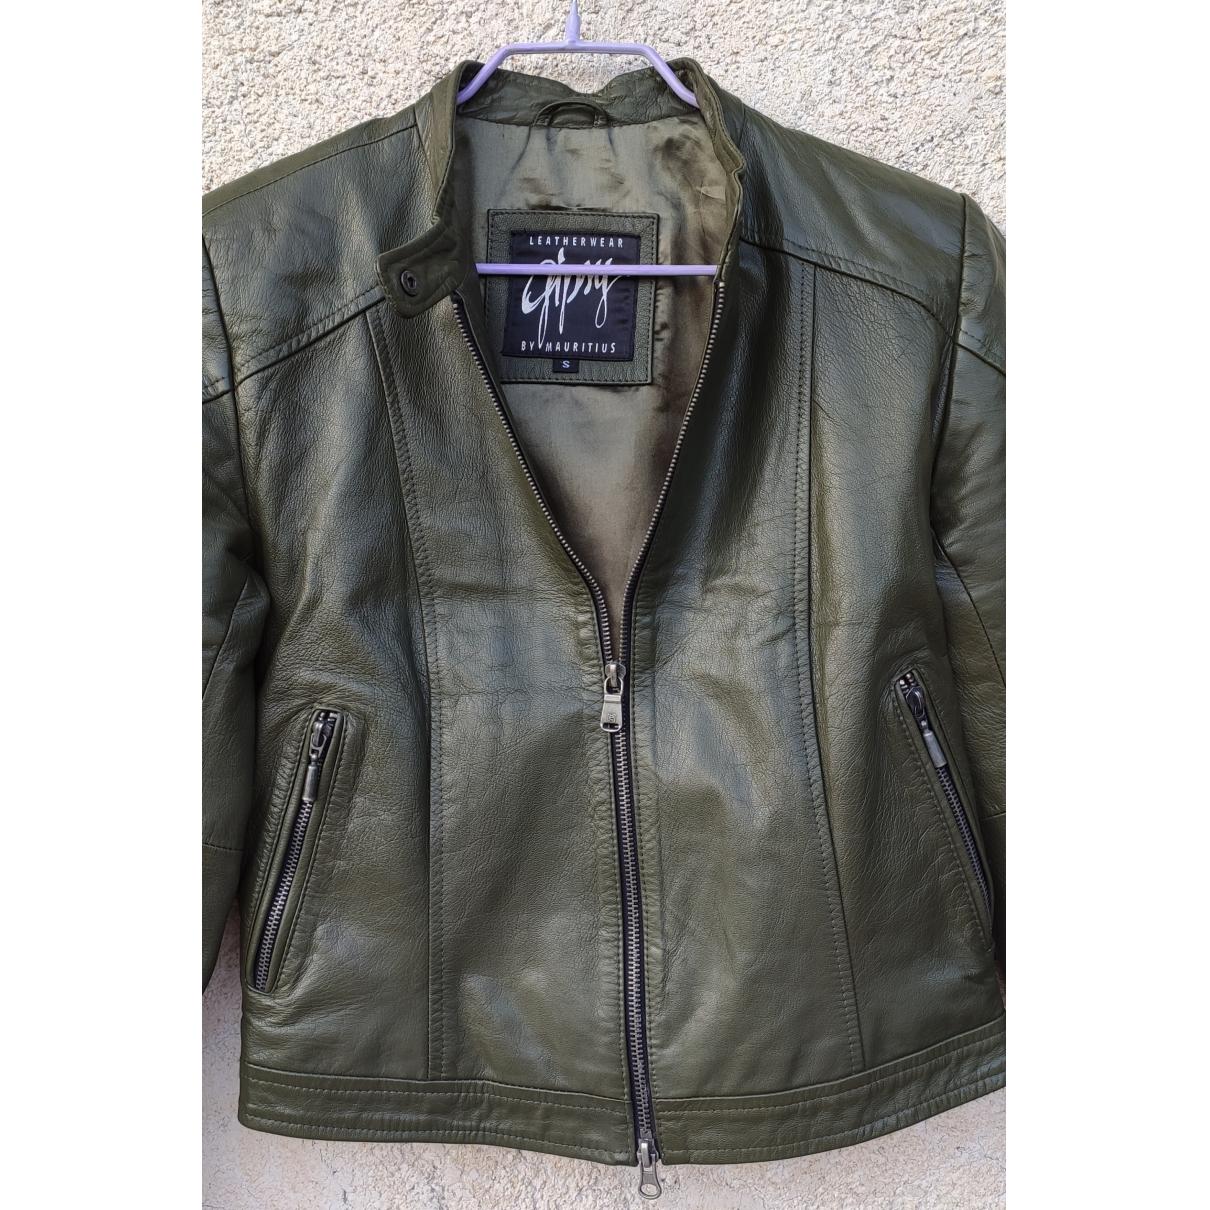 31933125 Leather size S - in Leather Green gipsy International biker jacket